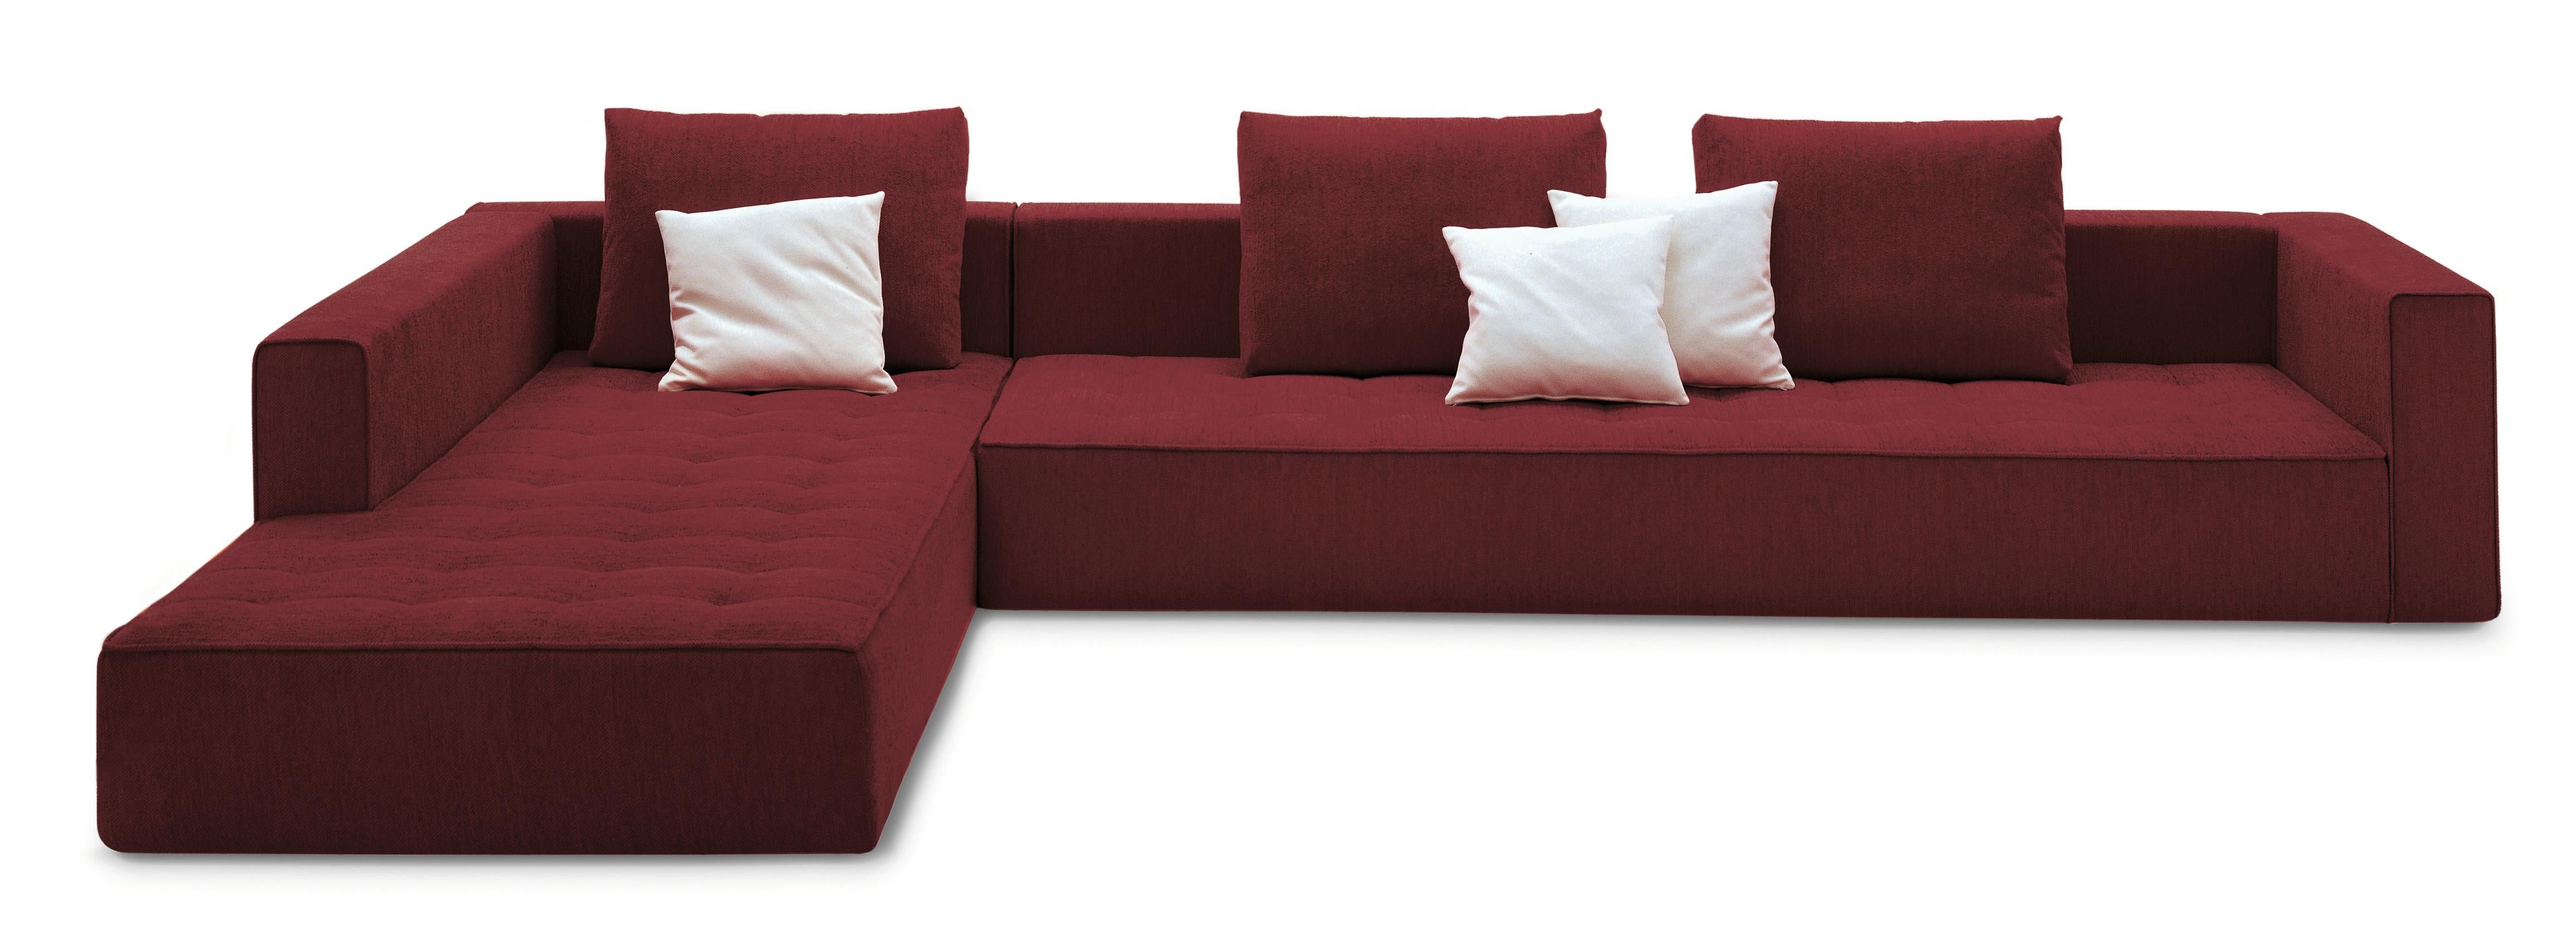 Leather Customizable Zanotta Kilt Sofa by Emaf Progetti  For Sale